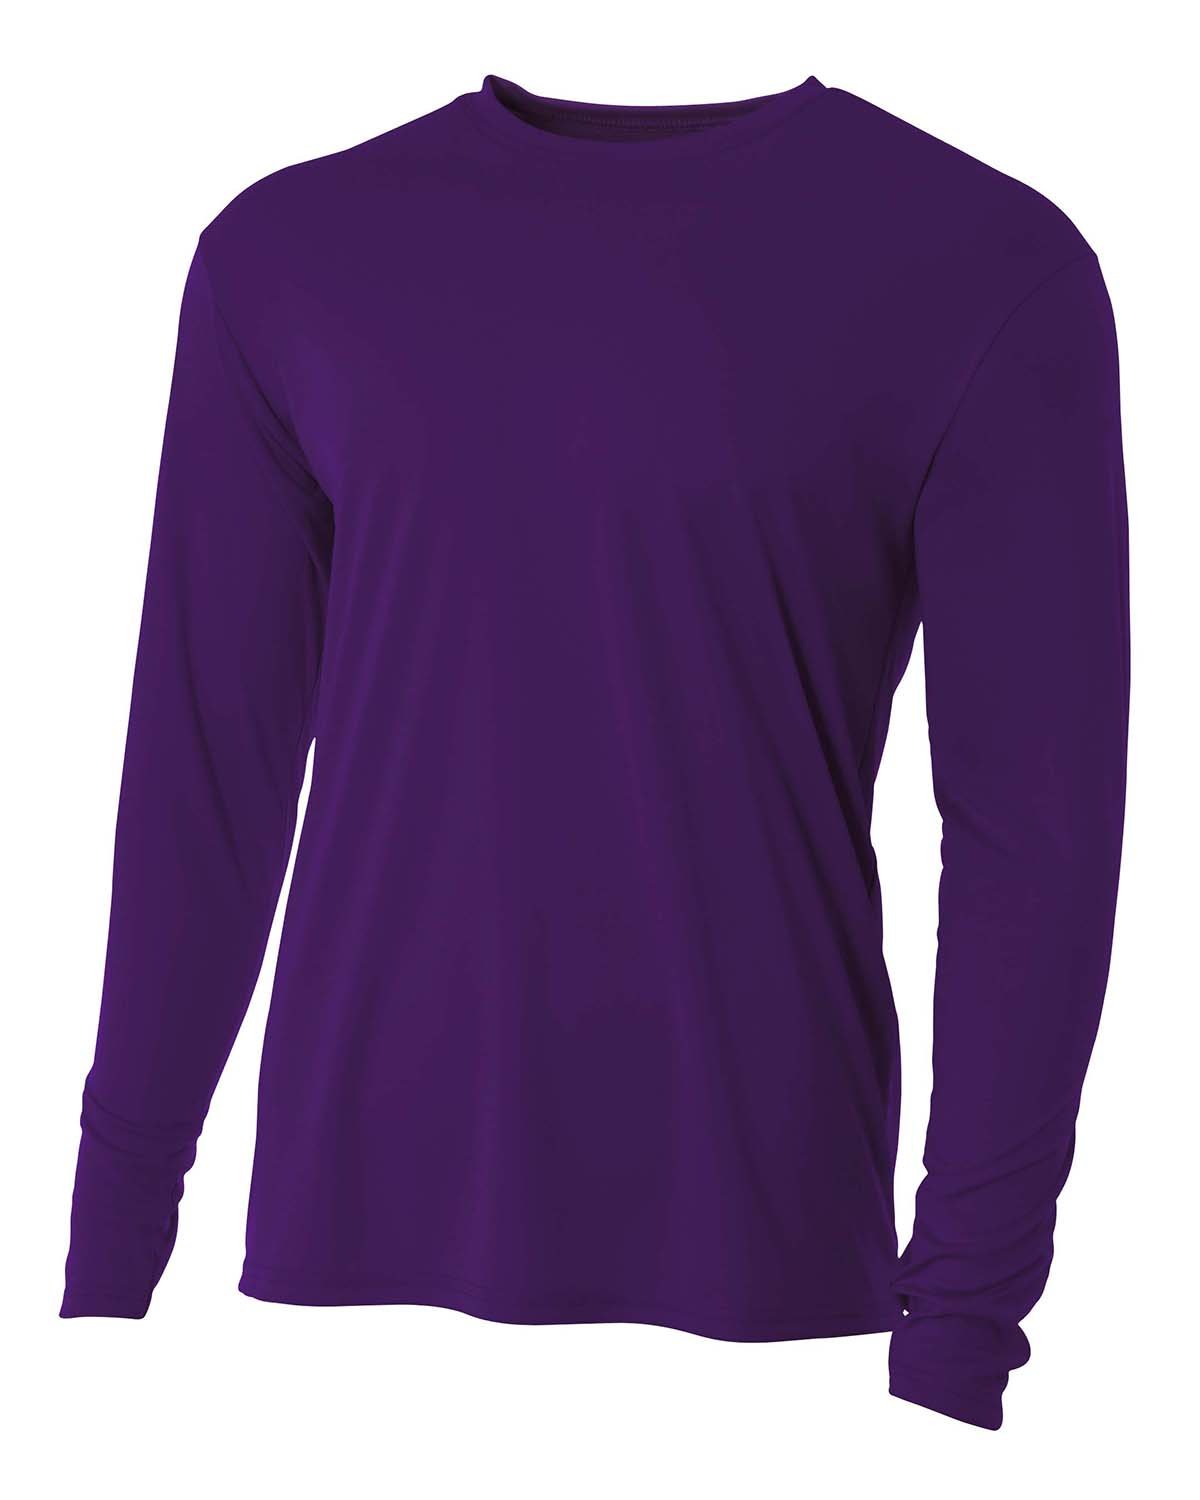 A4 Men's Cooling Performance Long Sleeve T-Shirt purple 